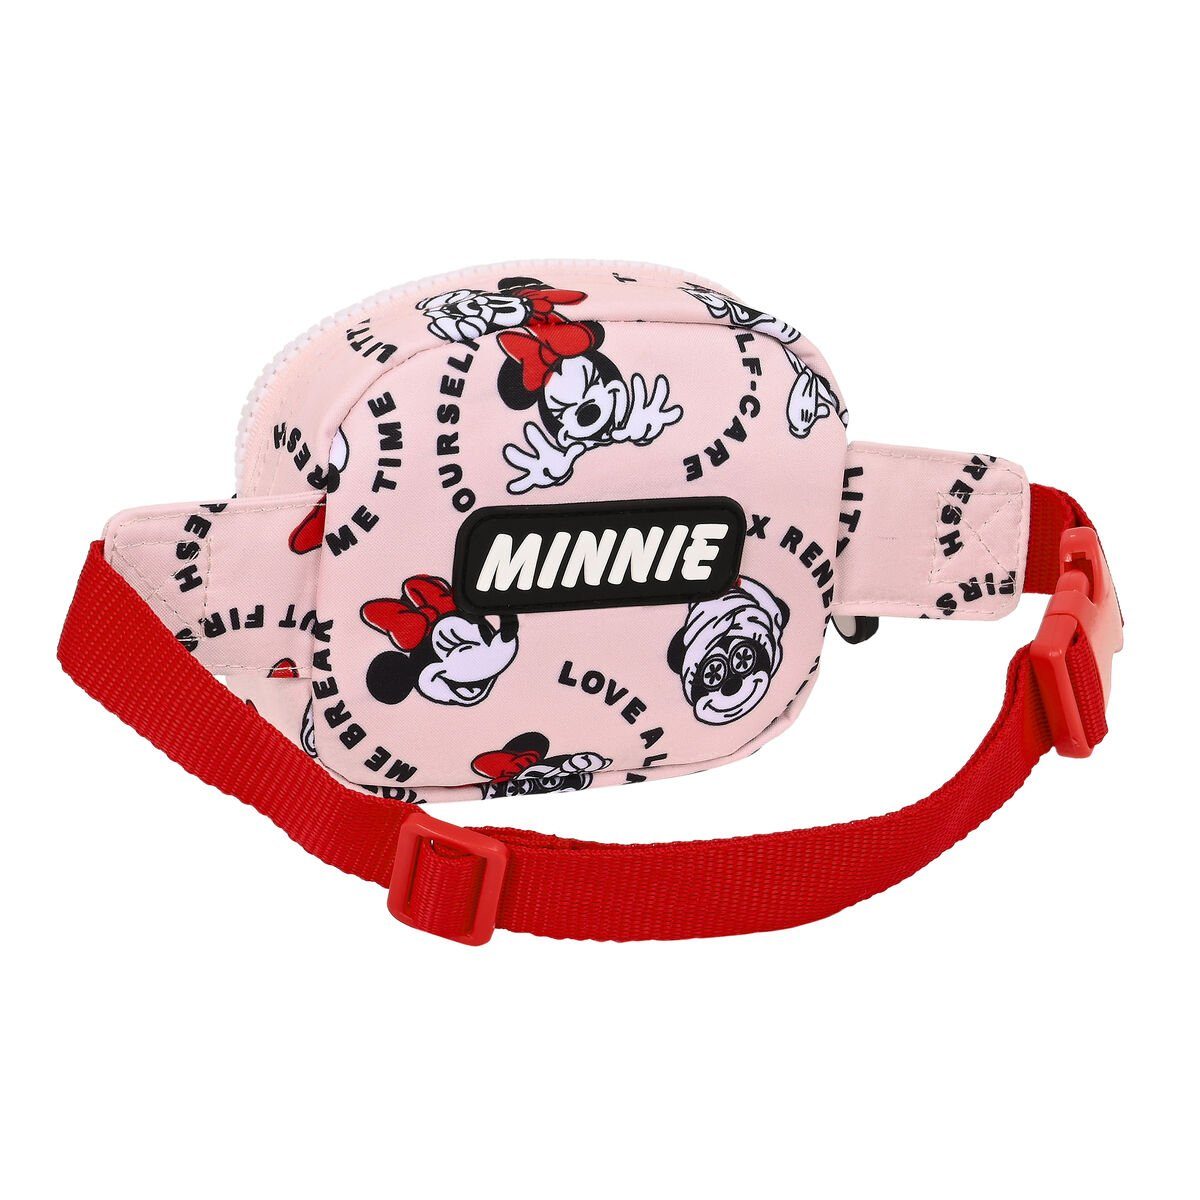 Disney Minnie Mouse Handtasche 11 x cm x Rosa time Mouse Gürteltasche Minnie 4 Me 14